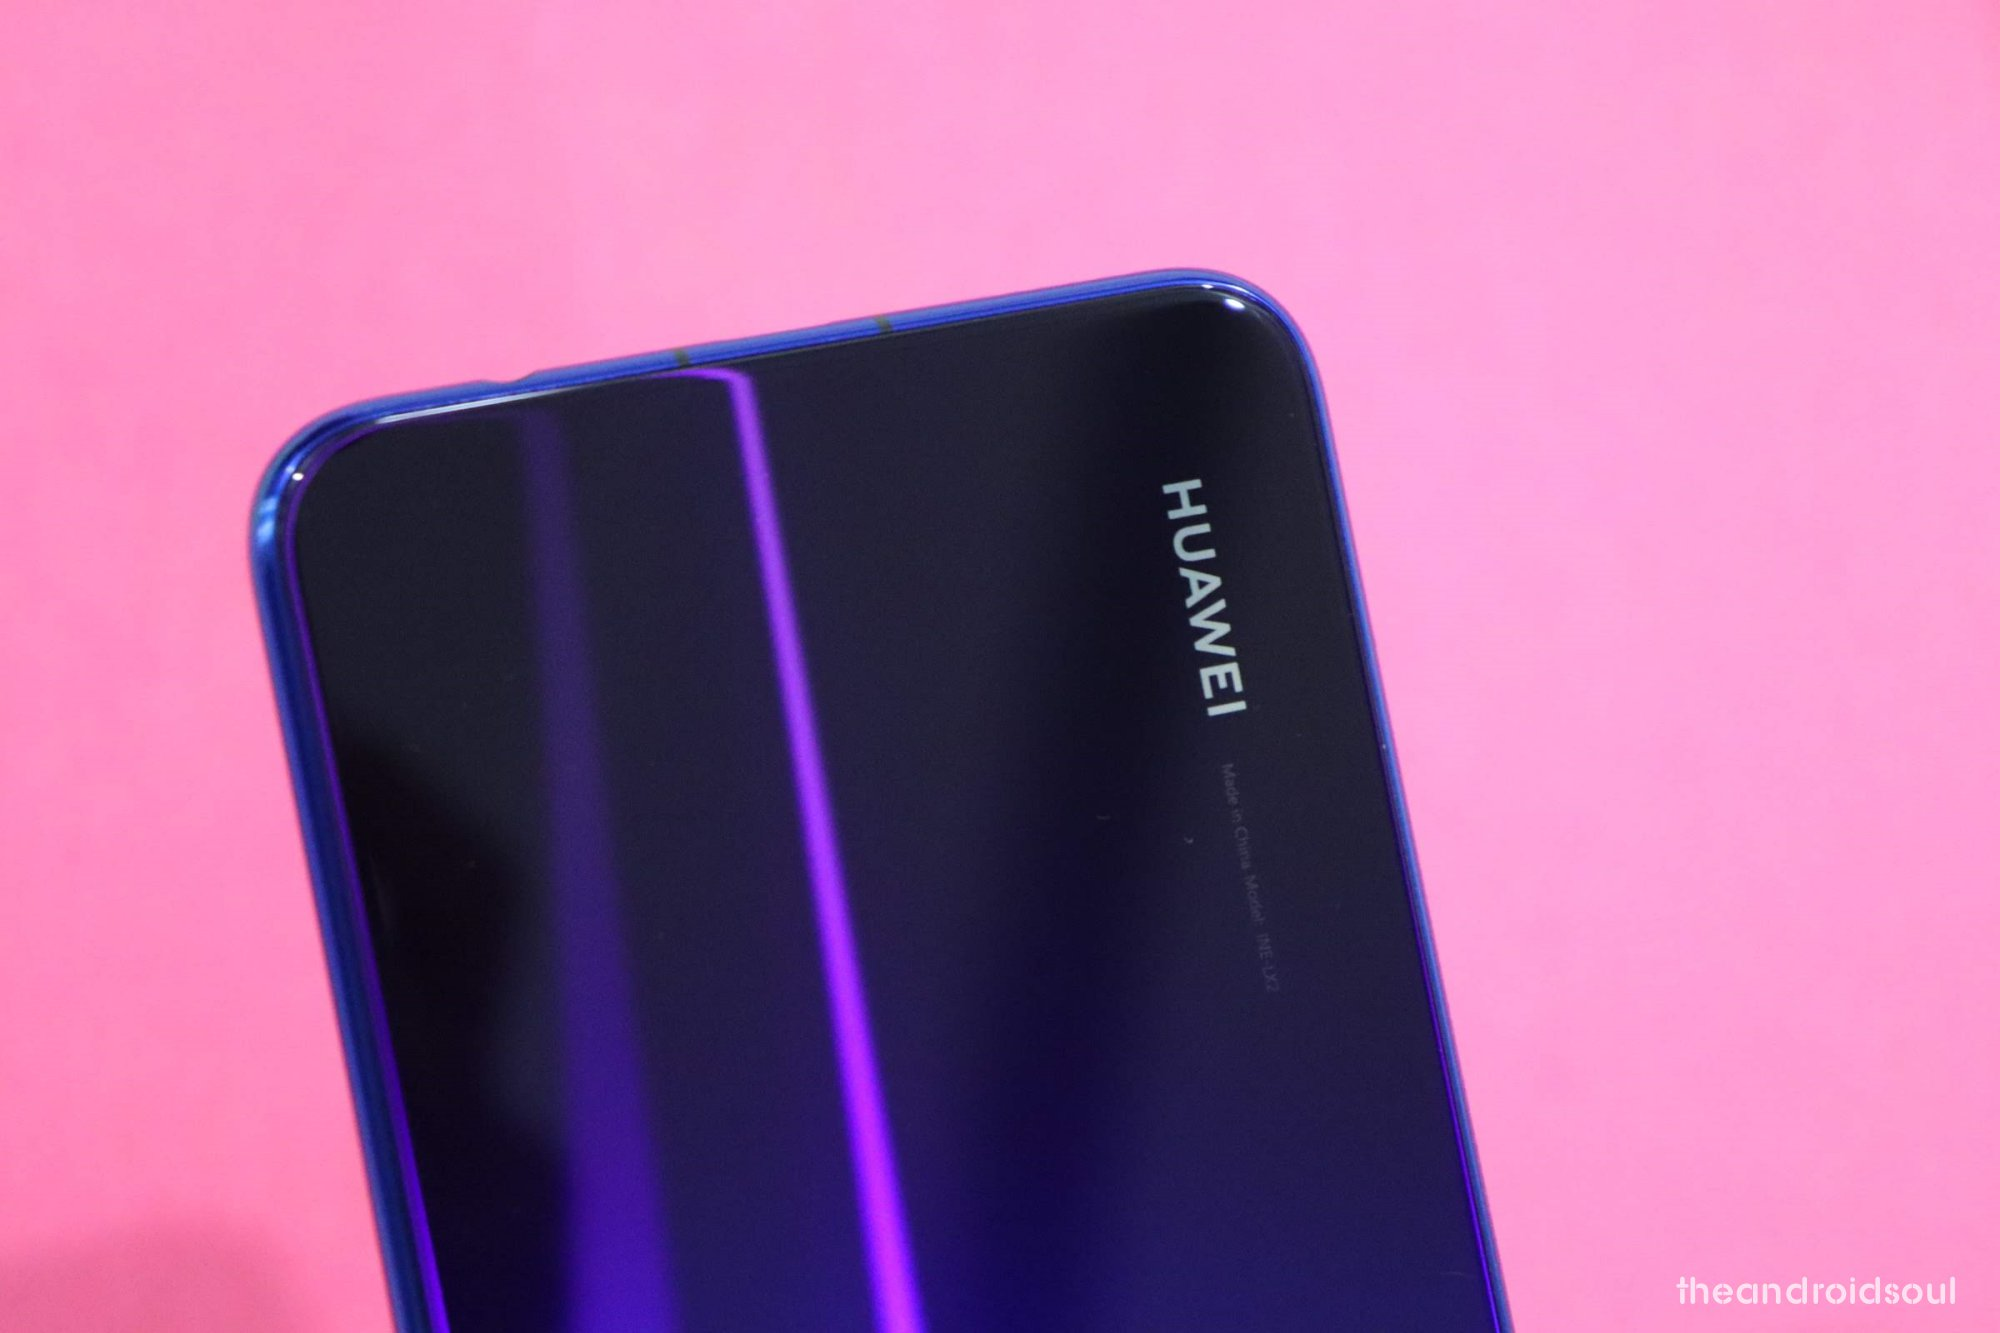 Huawei EMUI 9 beta released